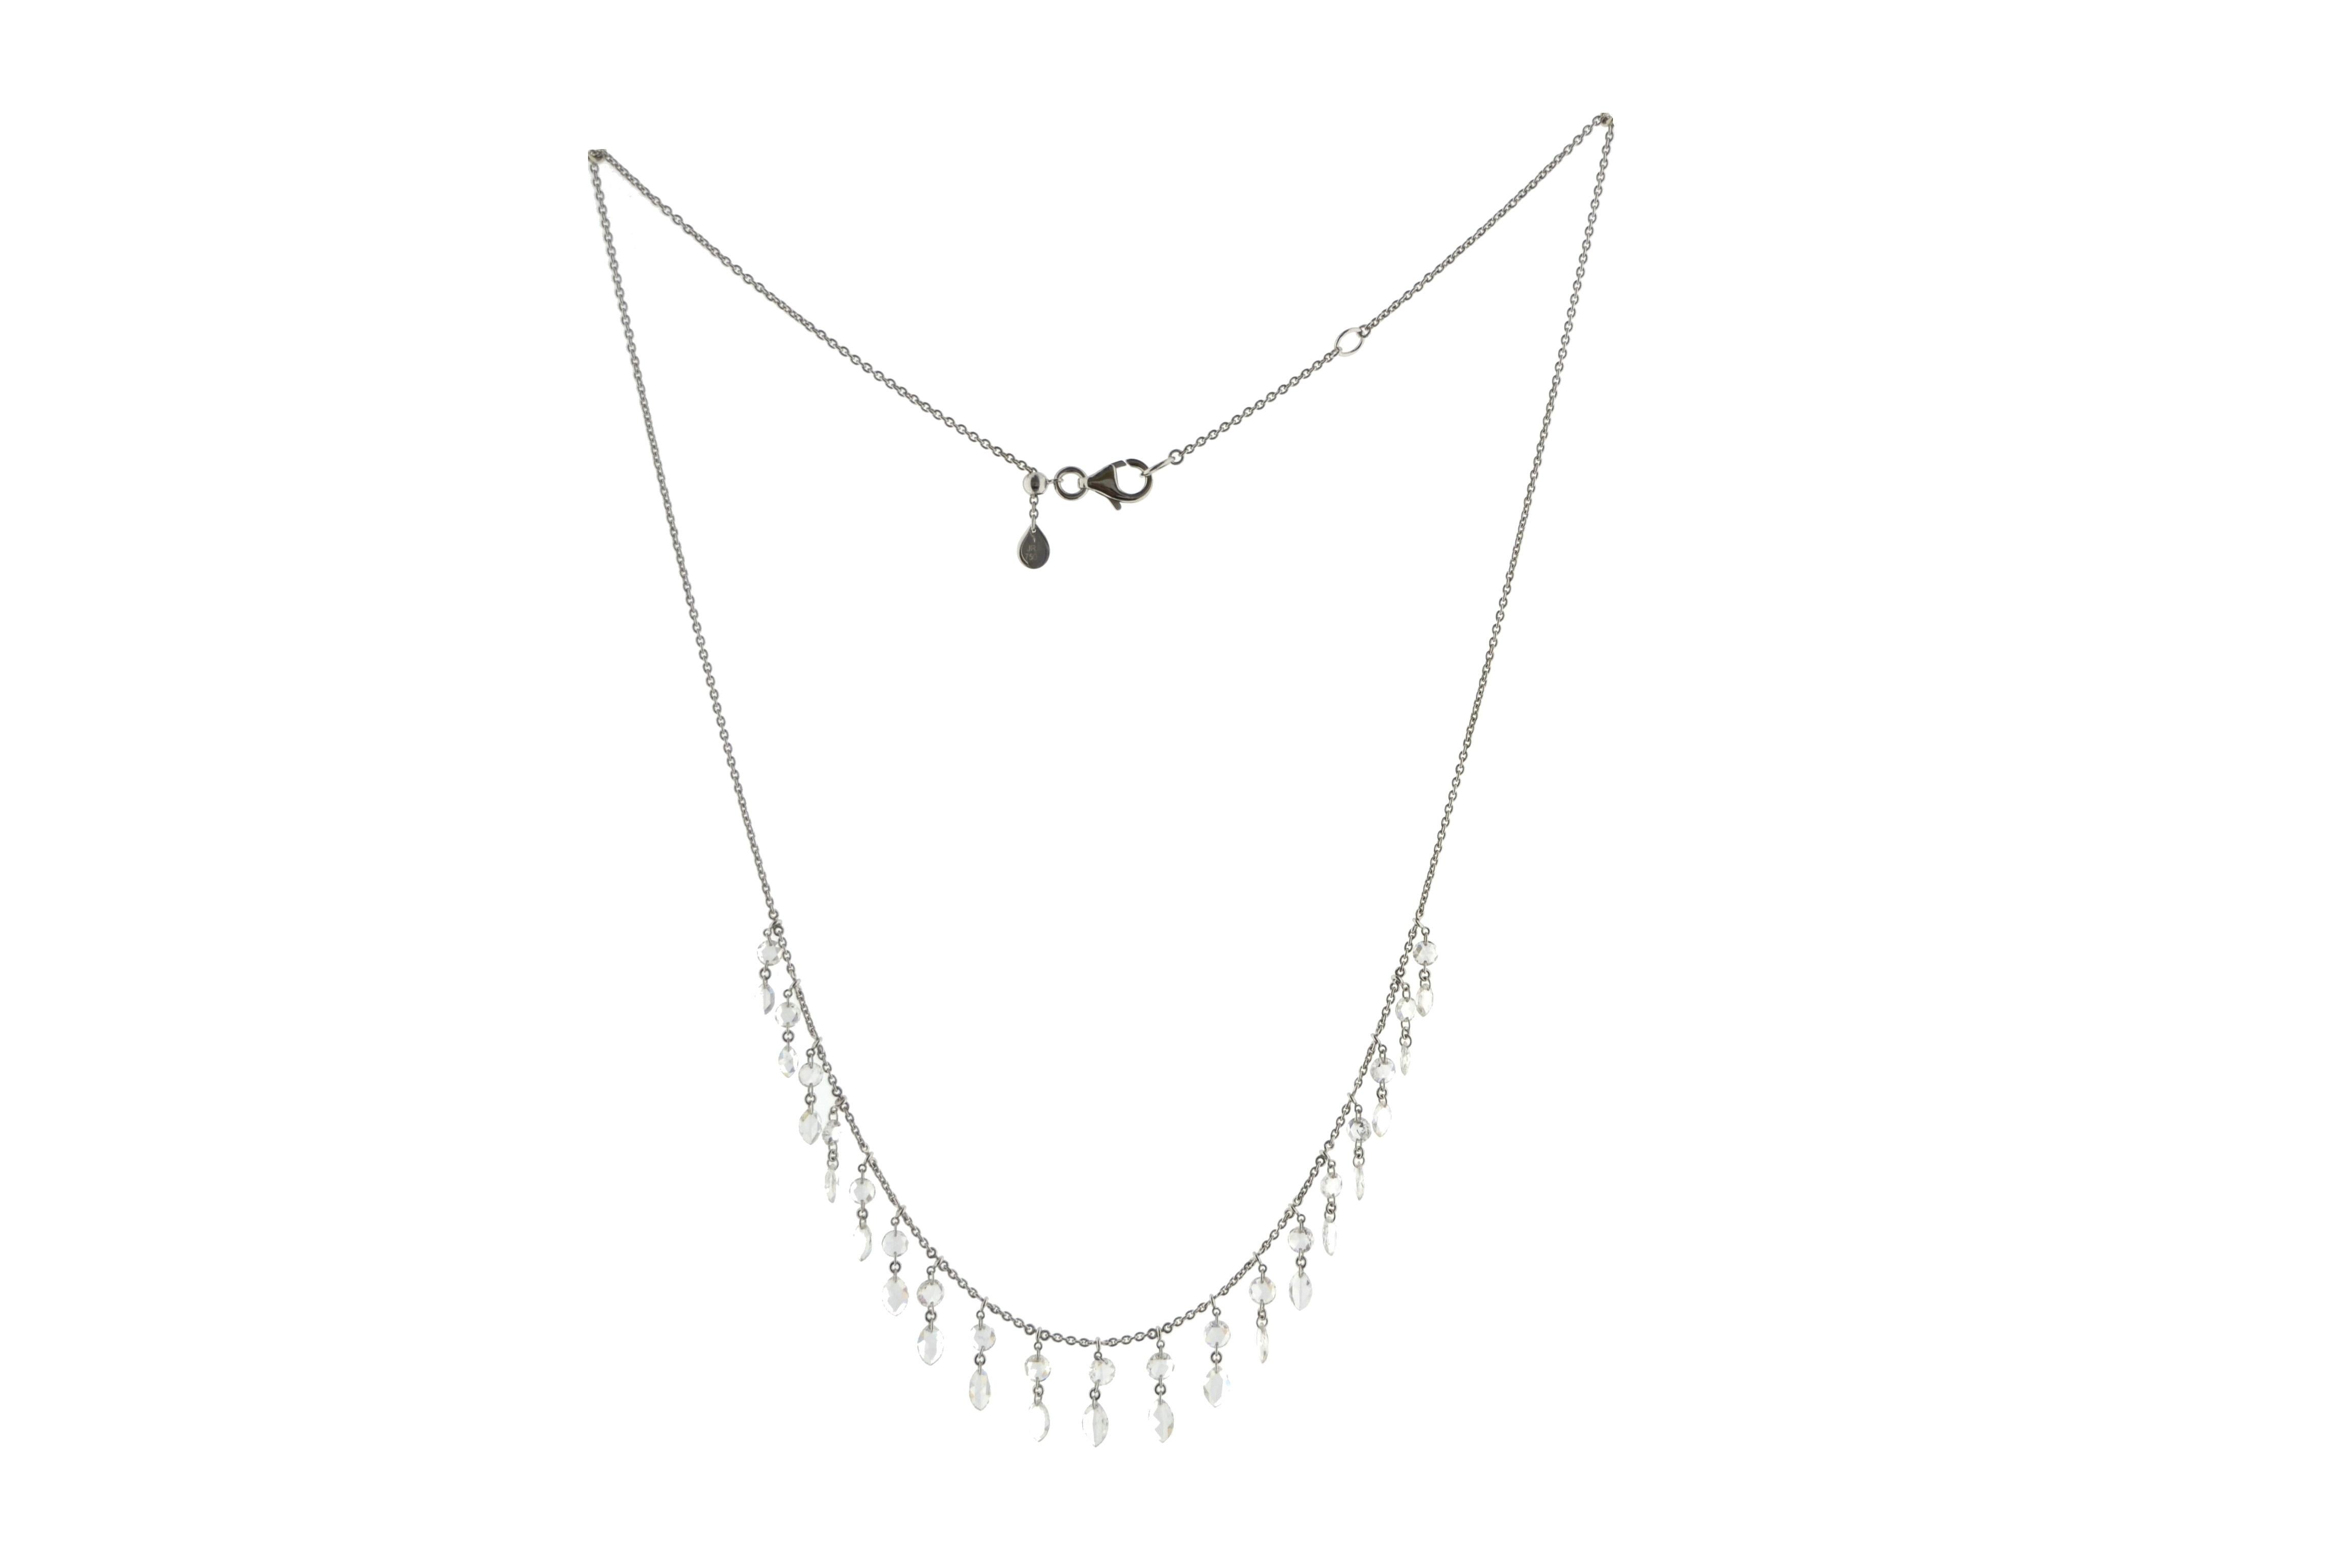 JR 3.17 Carat Rose Cut Diamond Dangling Necklace 18 Karat White Gold For Sale 2